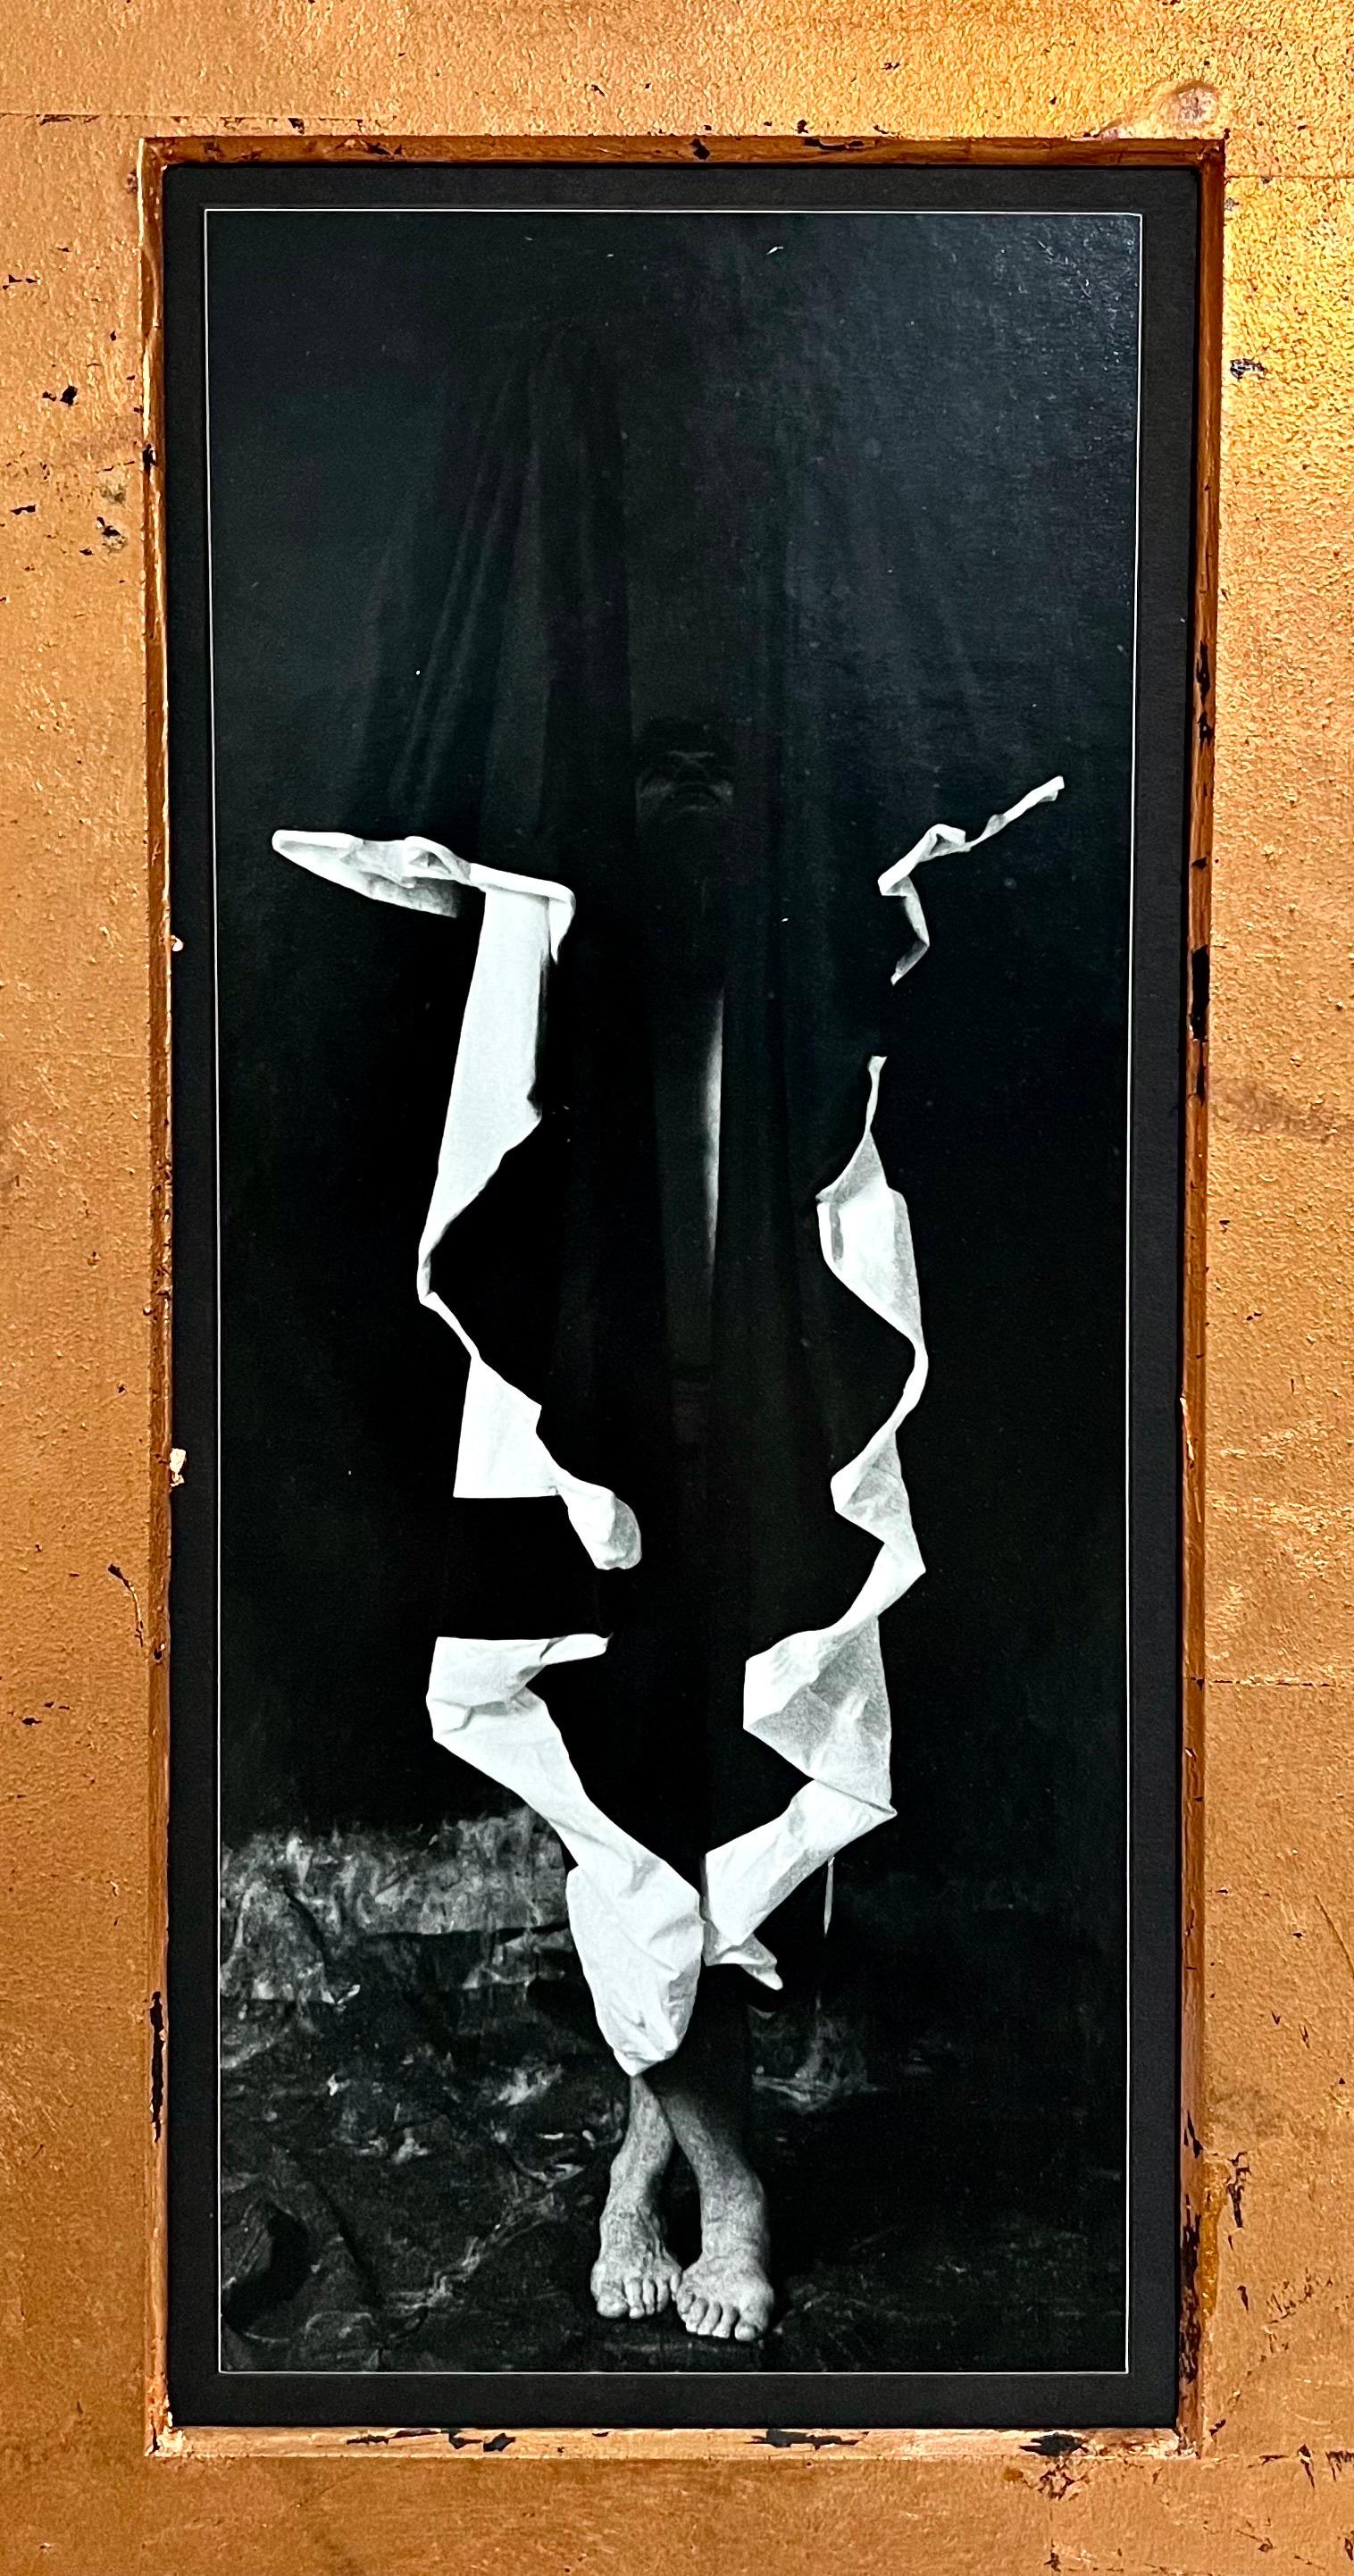 Marcus Leatherdale Black and White Photograph – Vintage-Fotografie mit Silber-Gelatine-Druck Marcus Lederdale, geschwungene Figur